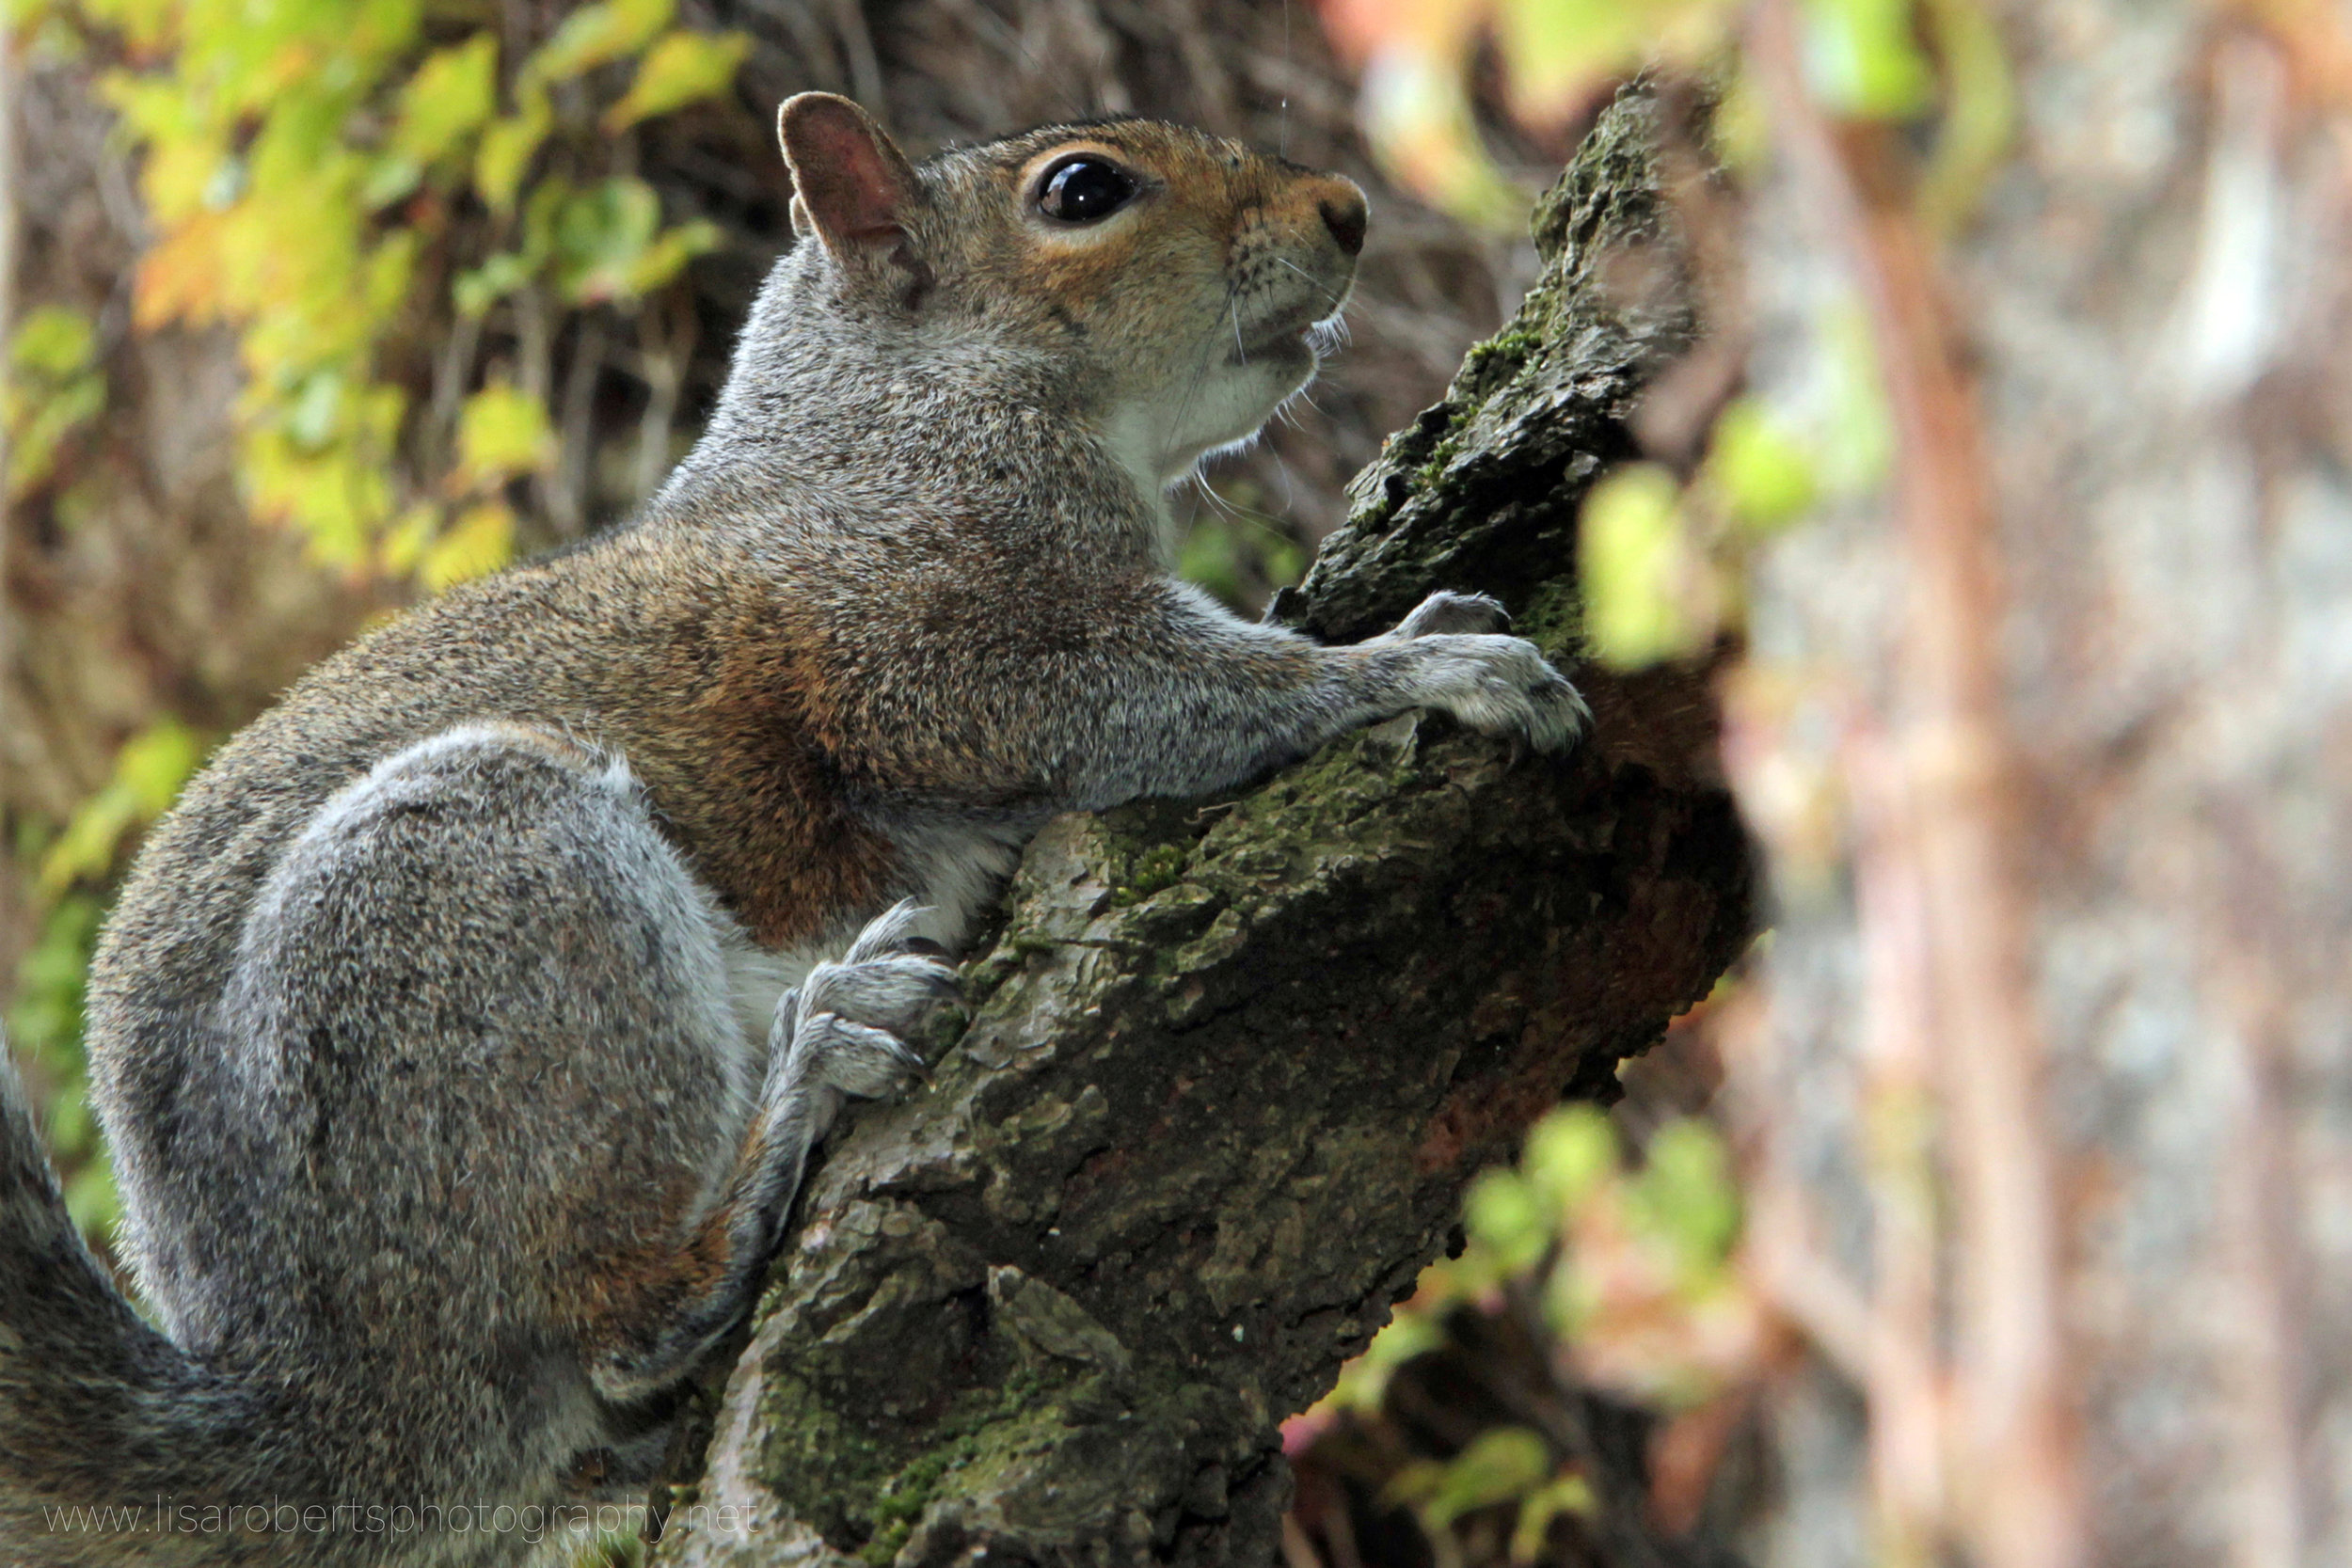  Grey Squirrel on Ivy branch 